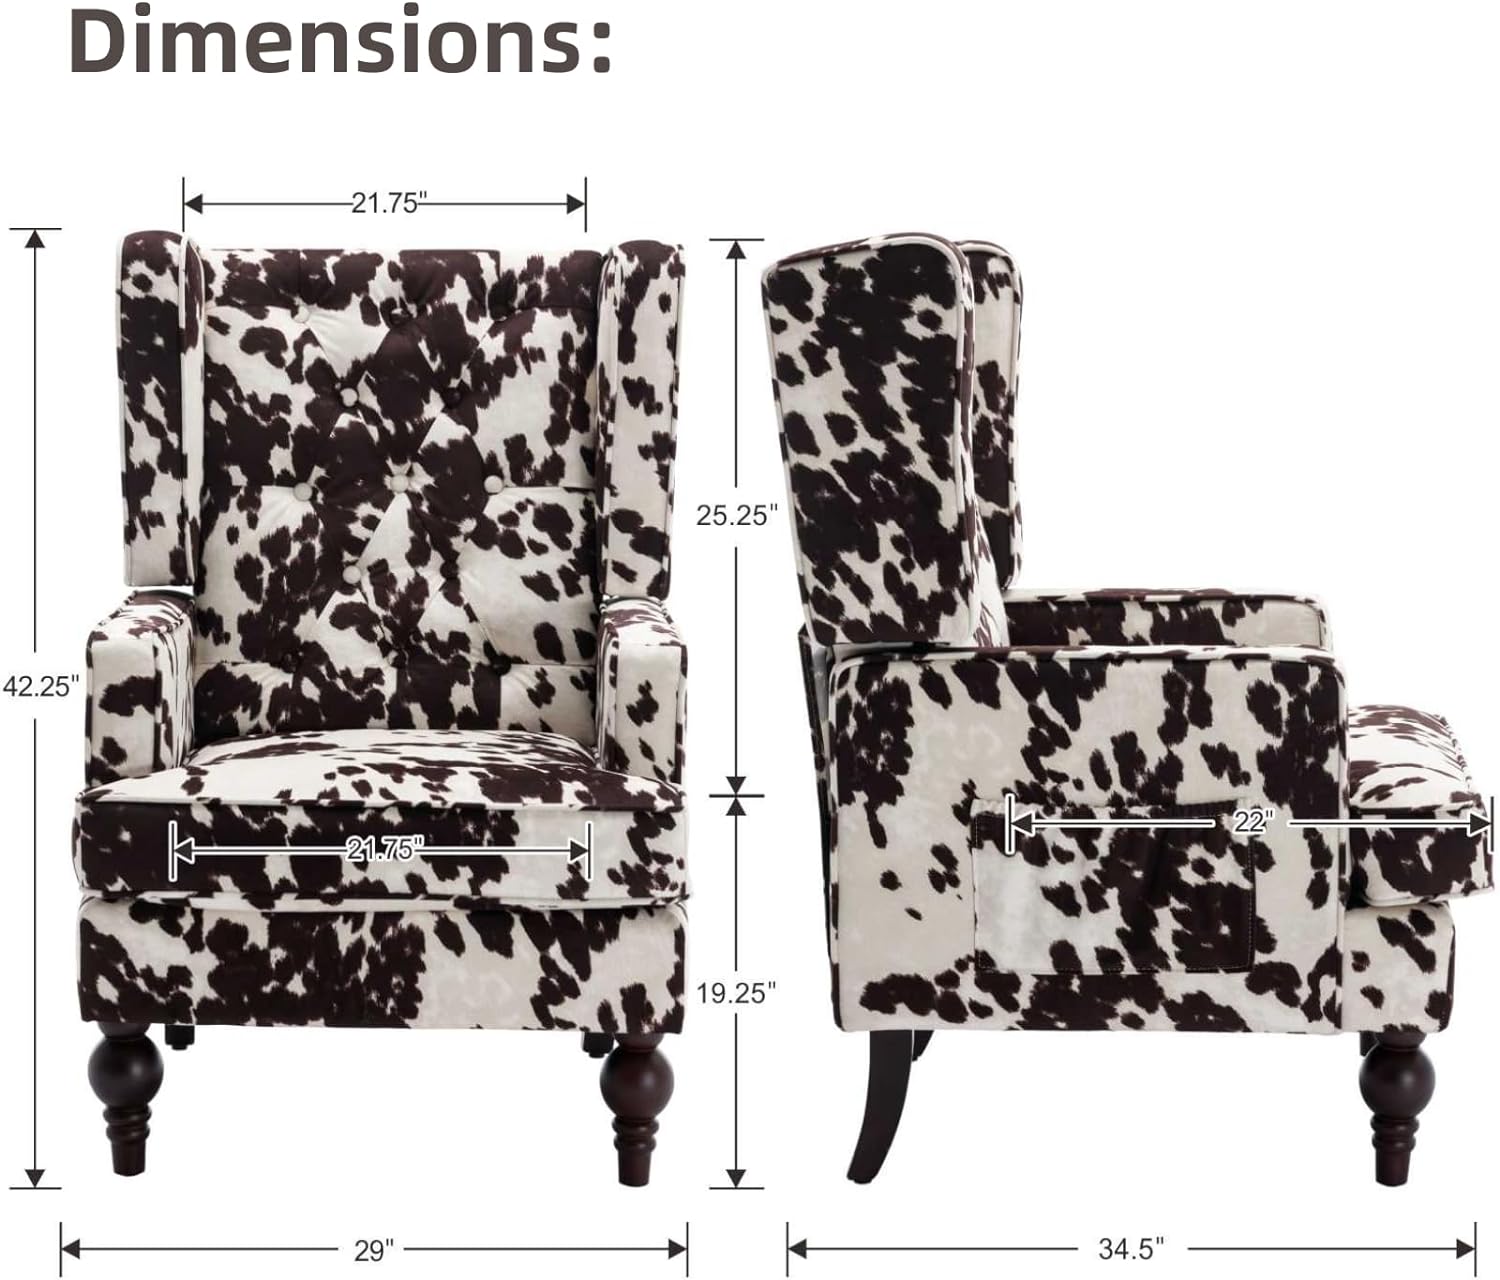 LukeAlon cow armchair dimensions